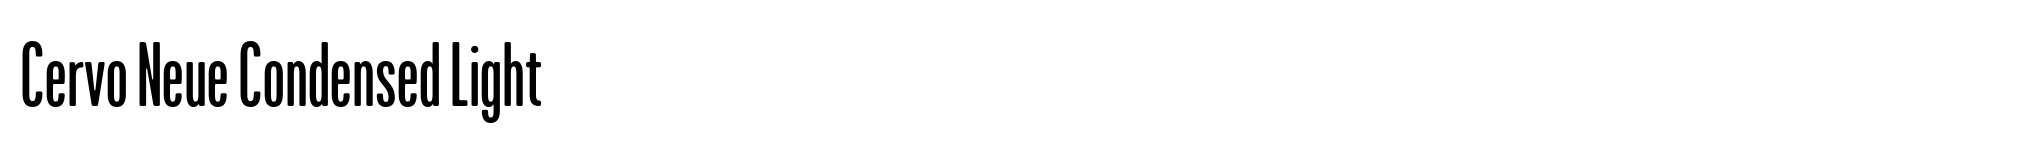 Cervo Neue Condensed Light image